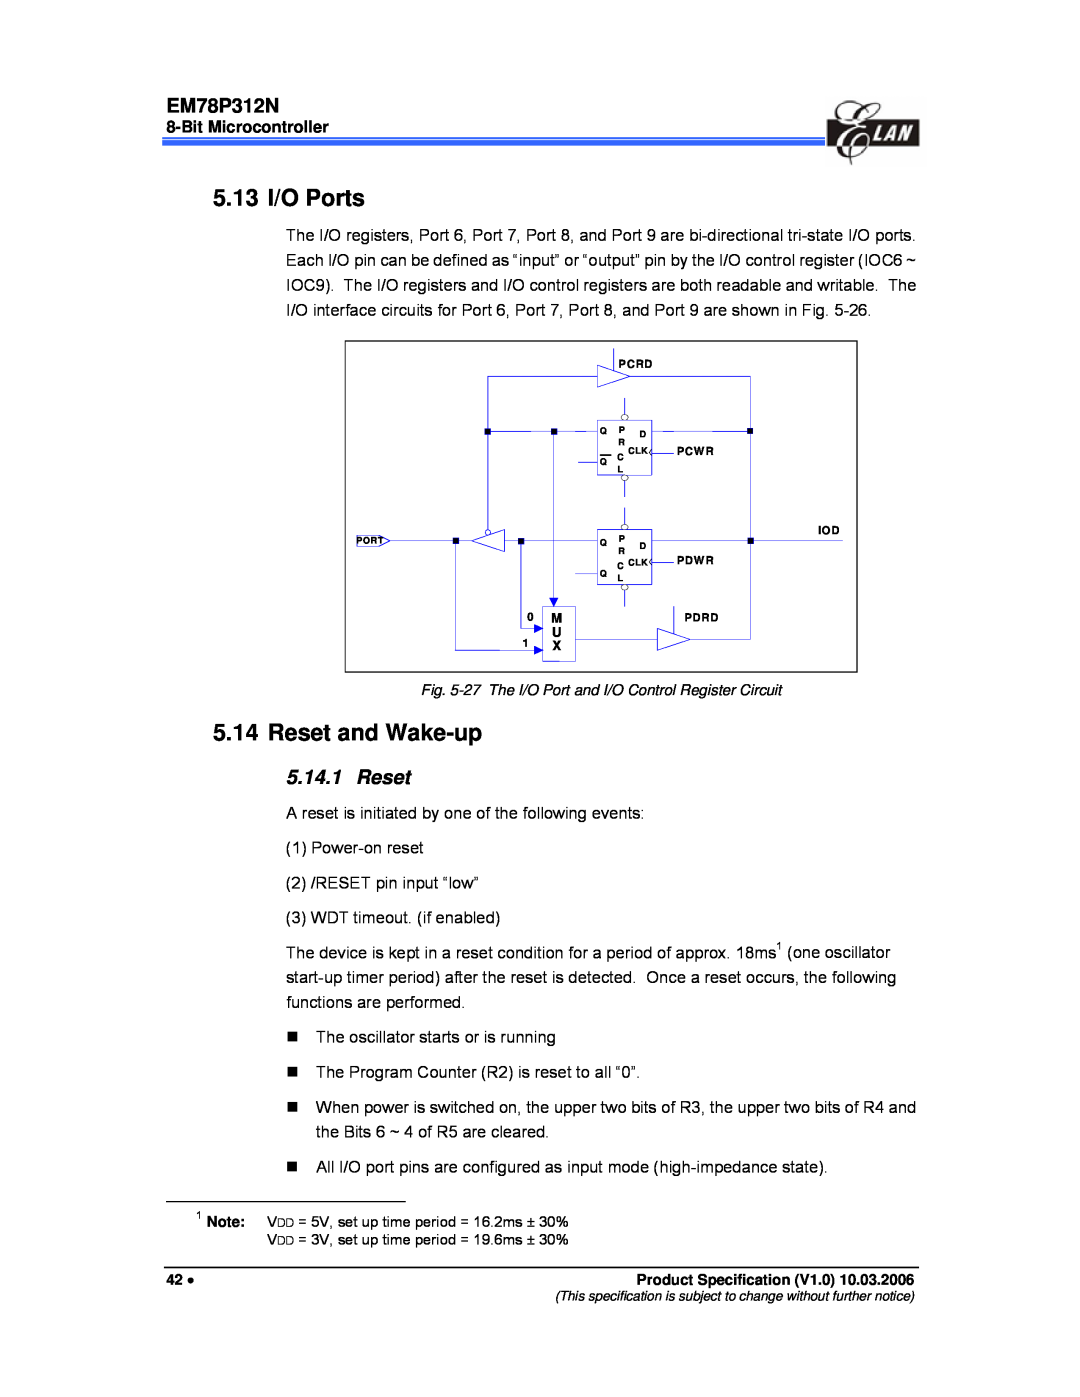 IBM EM78P312N manual 5.13 I/O Ports, Reset and Wake-up, Bit Microcontroller 